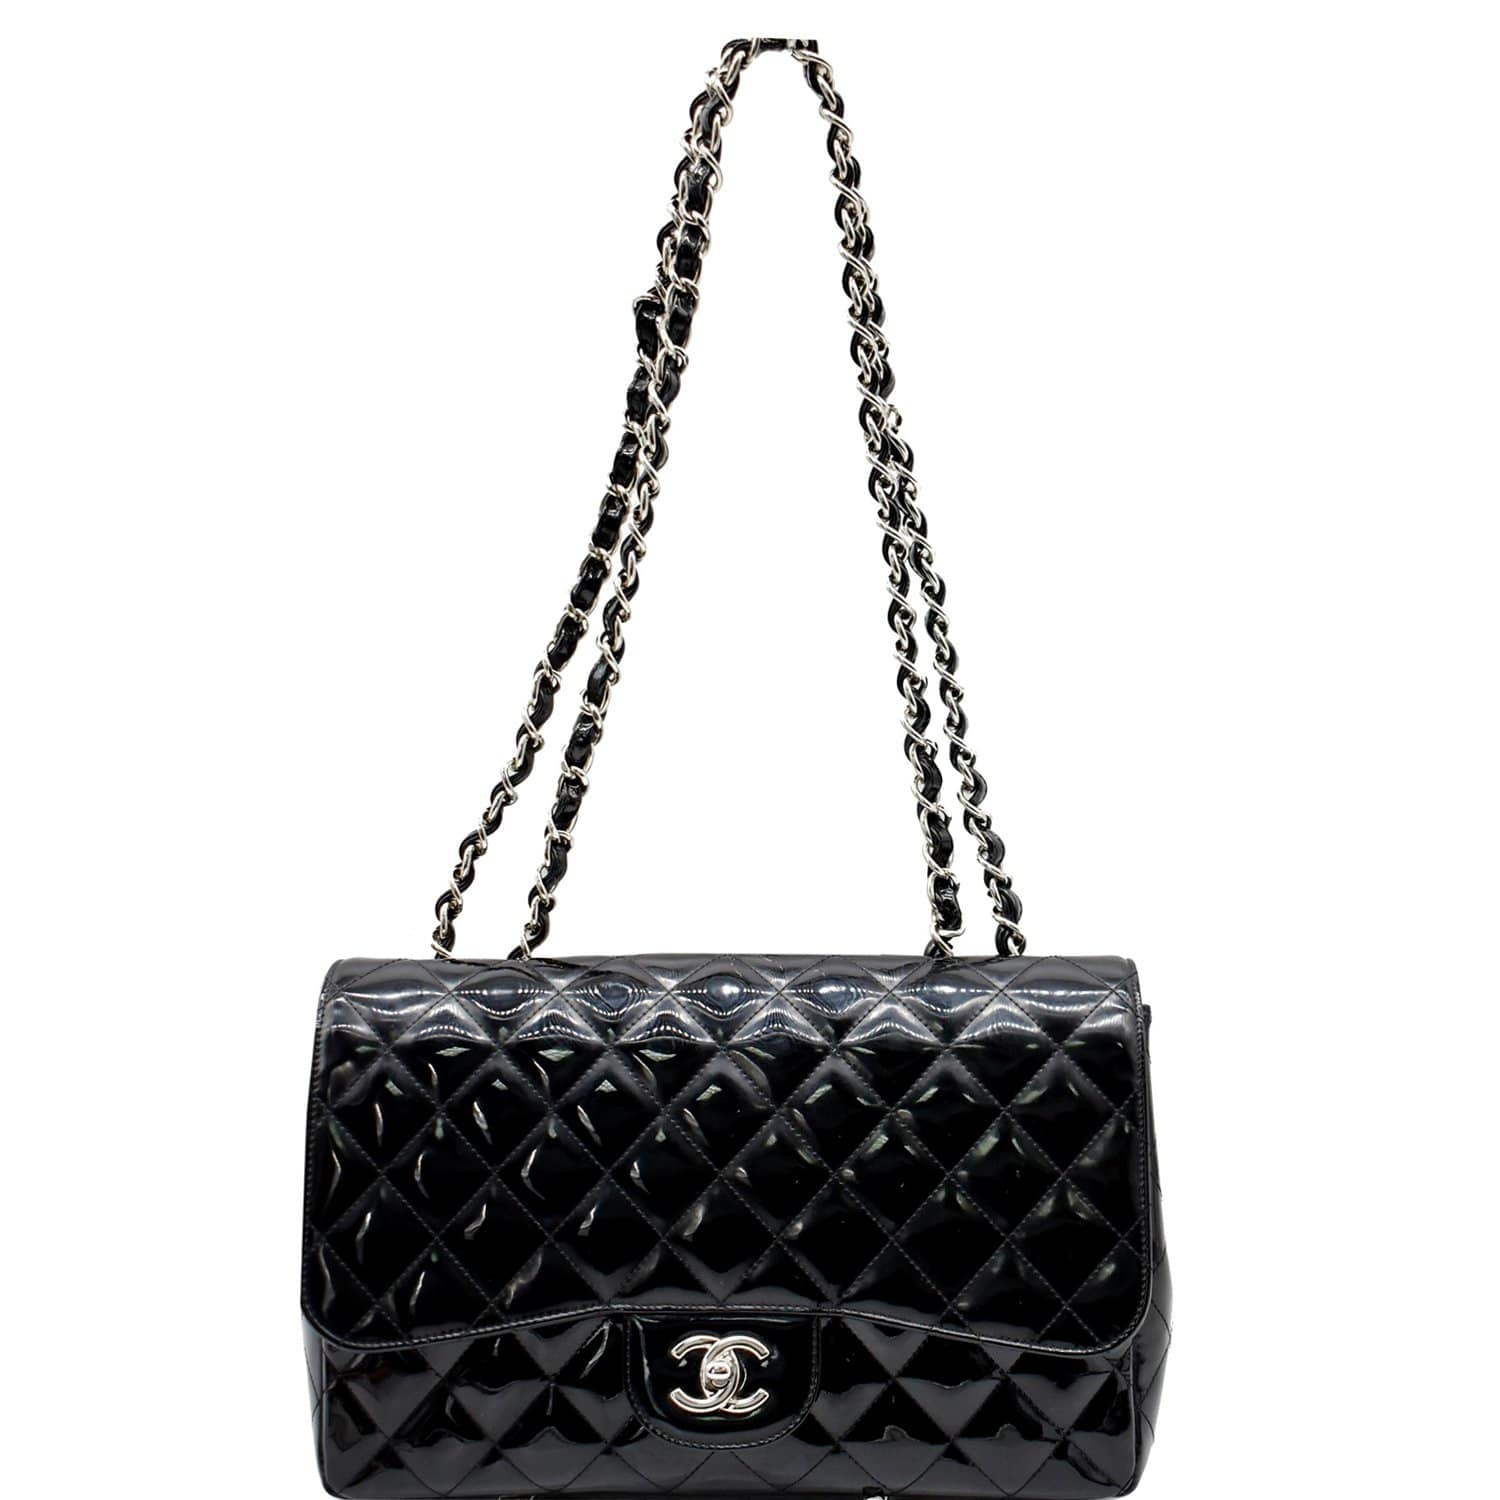 Chanel Jumbo Single Flap Patent Leather Shoulder Bag